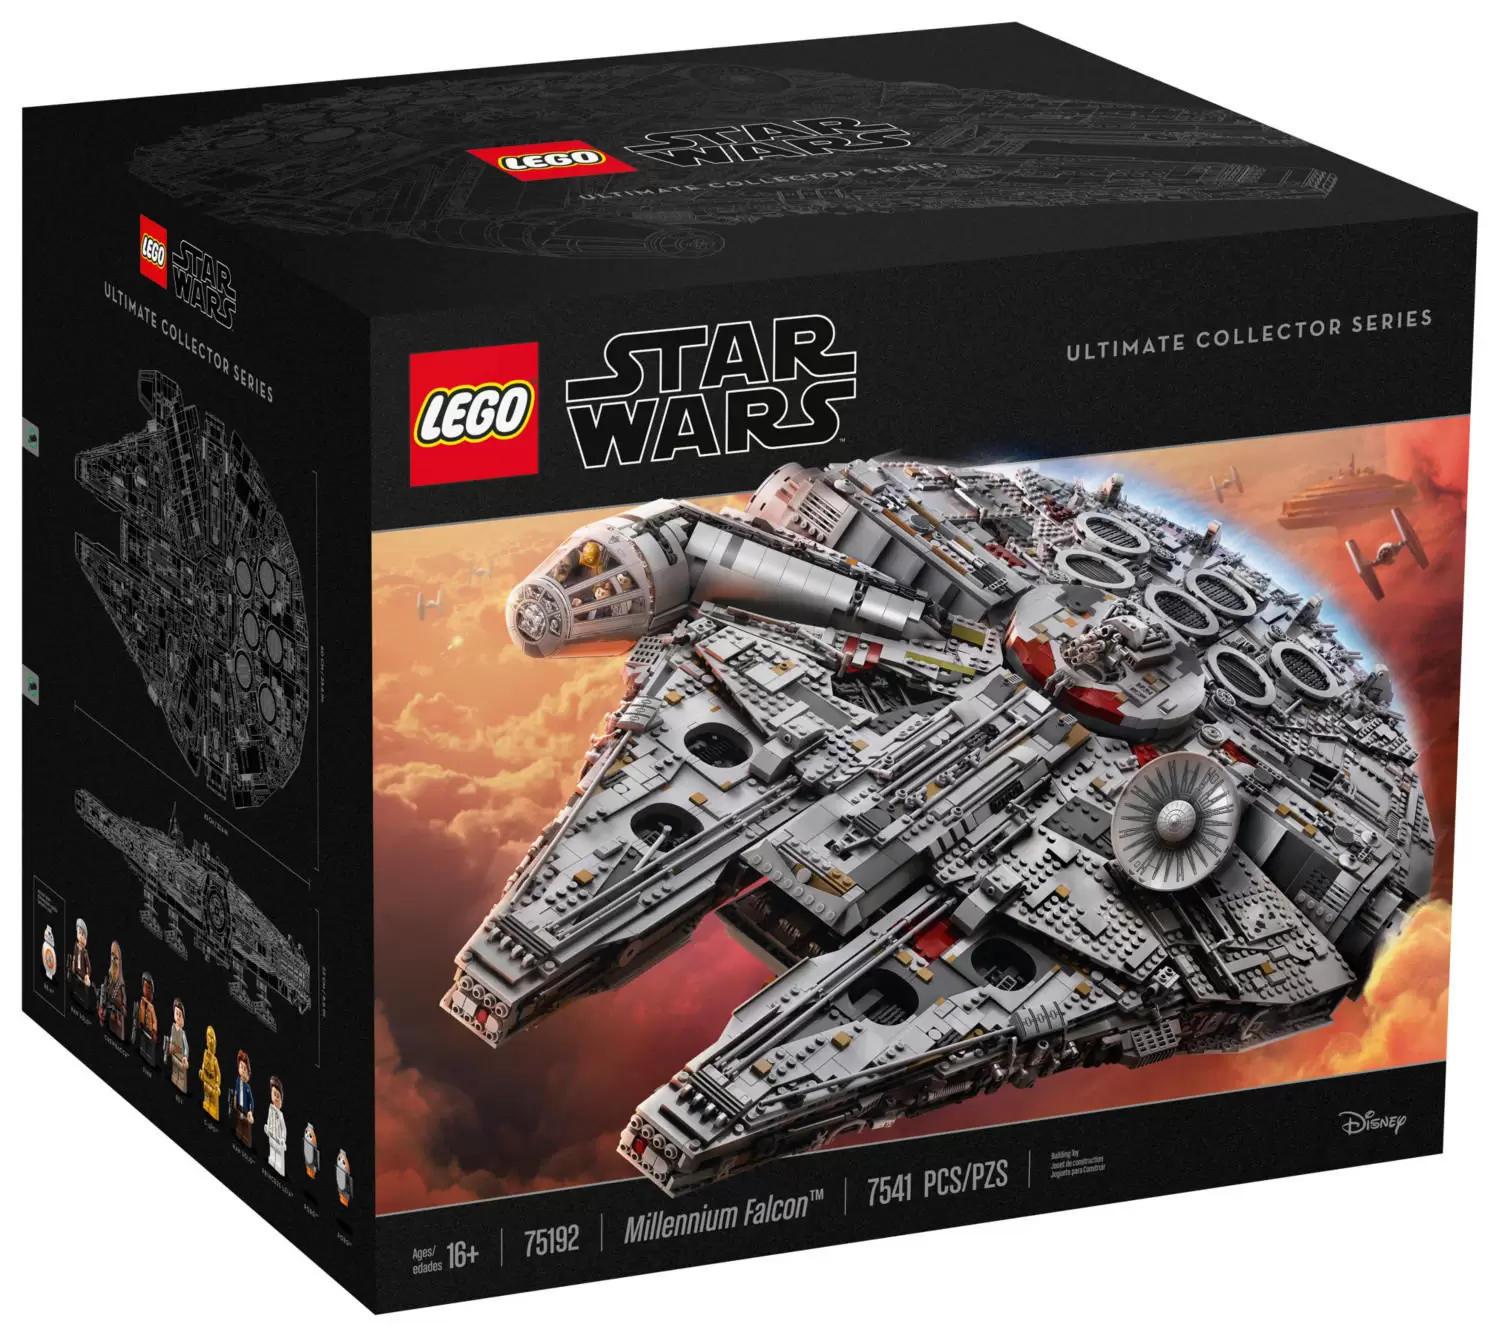 LEGO Star Wars - Millennium Falcon Ultimate Collector Series